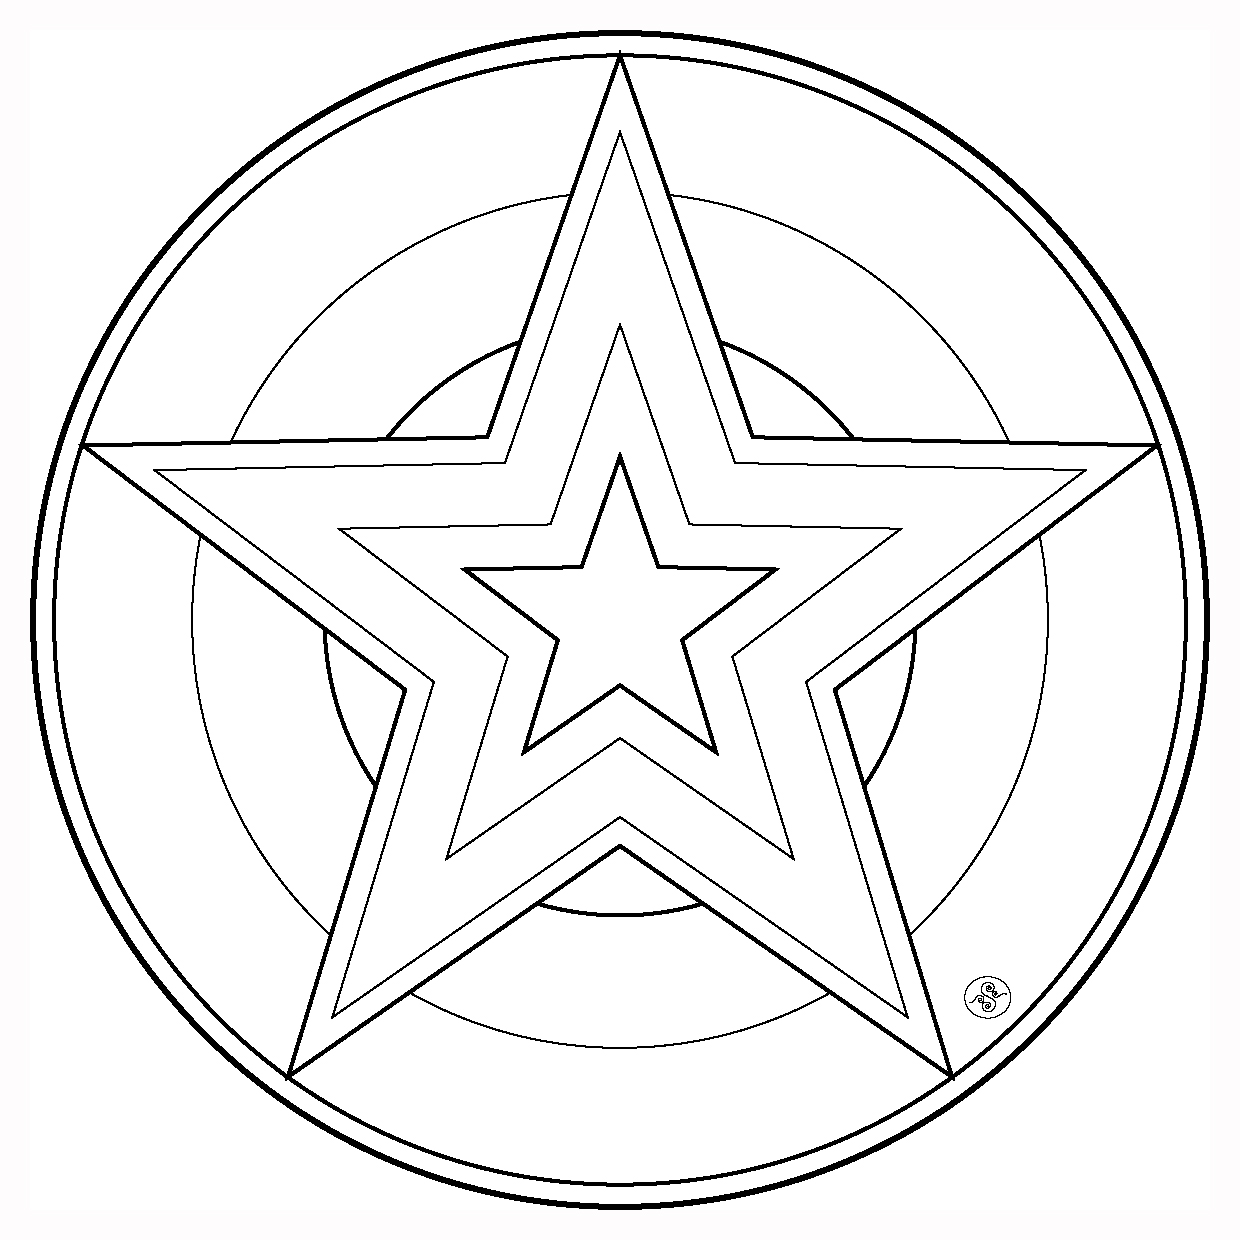 Star Mandalas #117956 (Mandalas) – Printable coloring pages